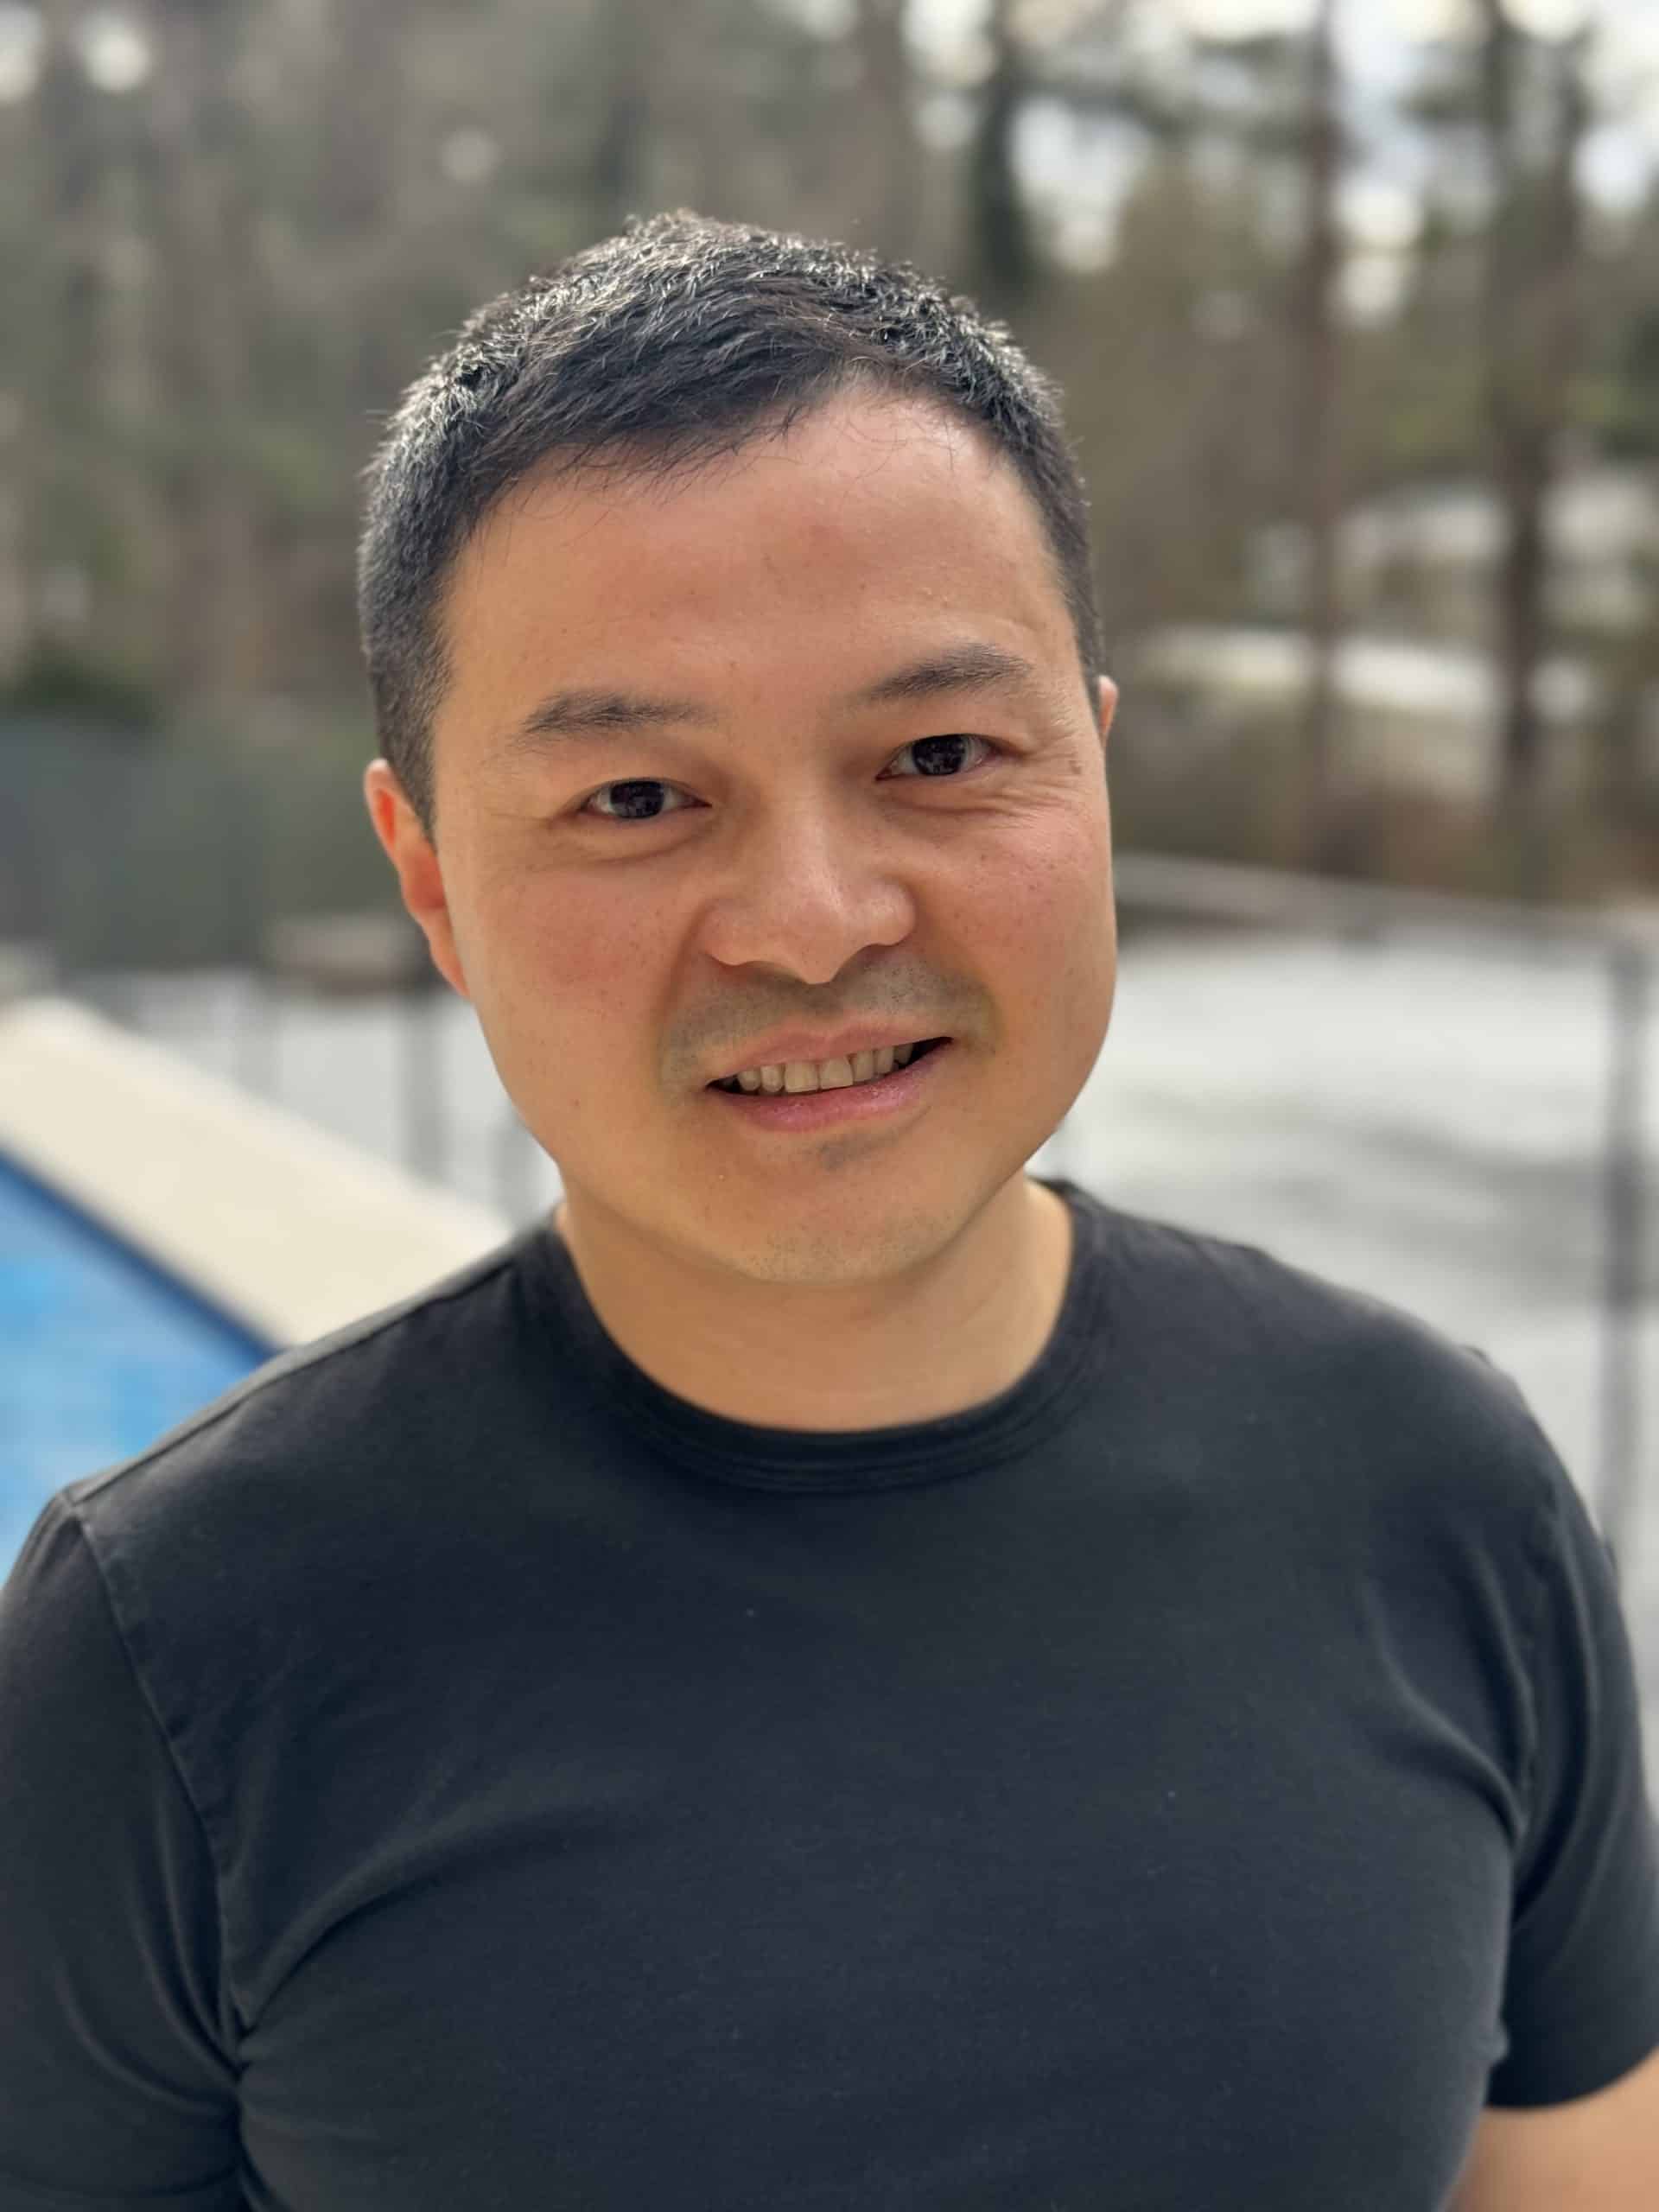 Scott Zhang wearing a black t-shirt standing by a swimming pool.